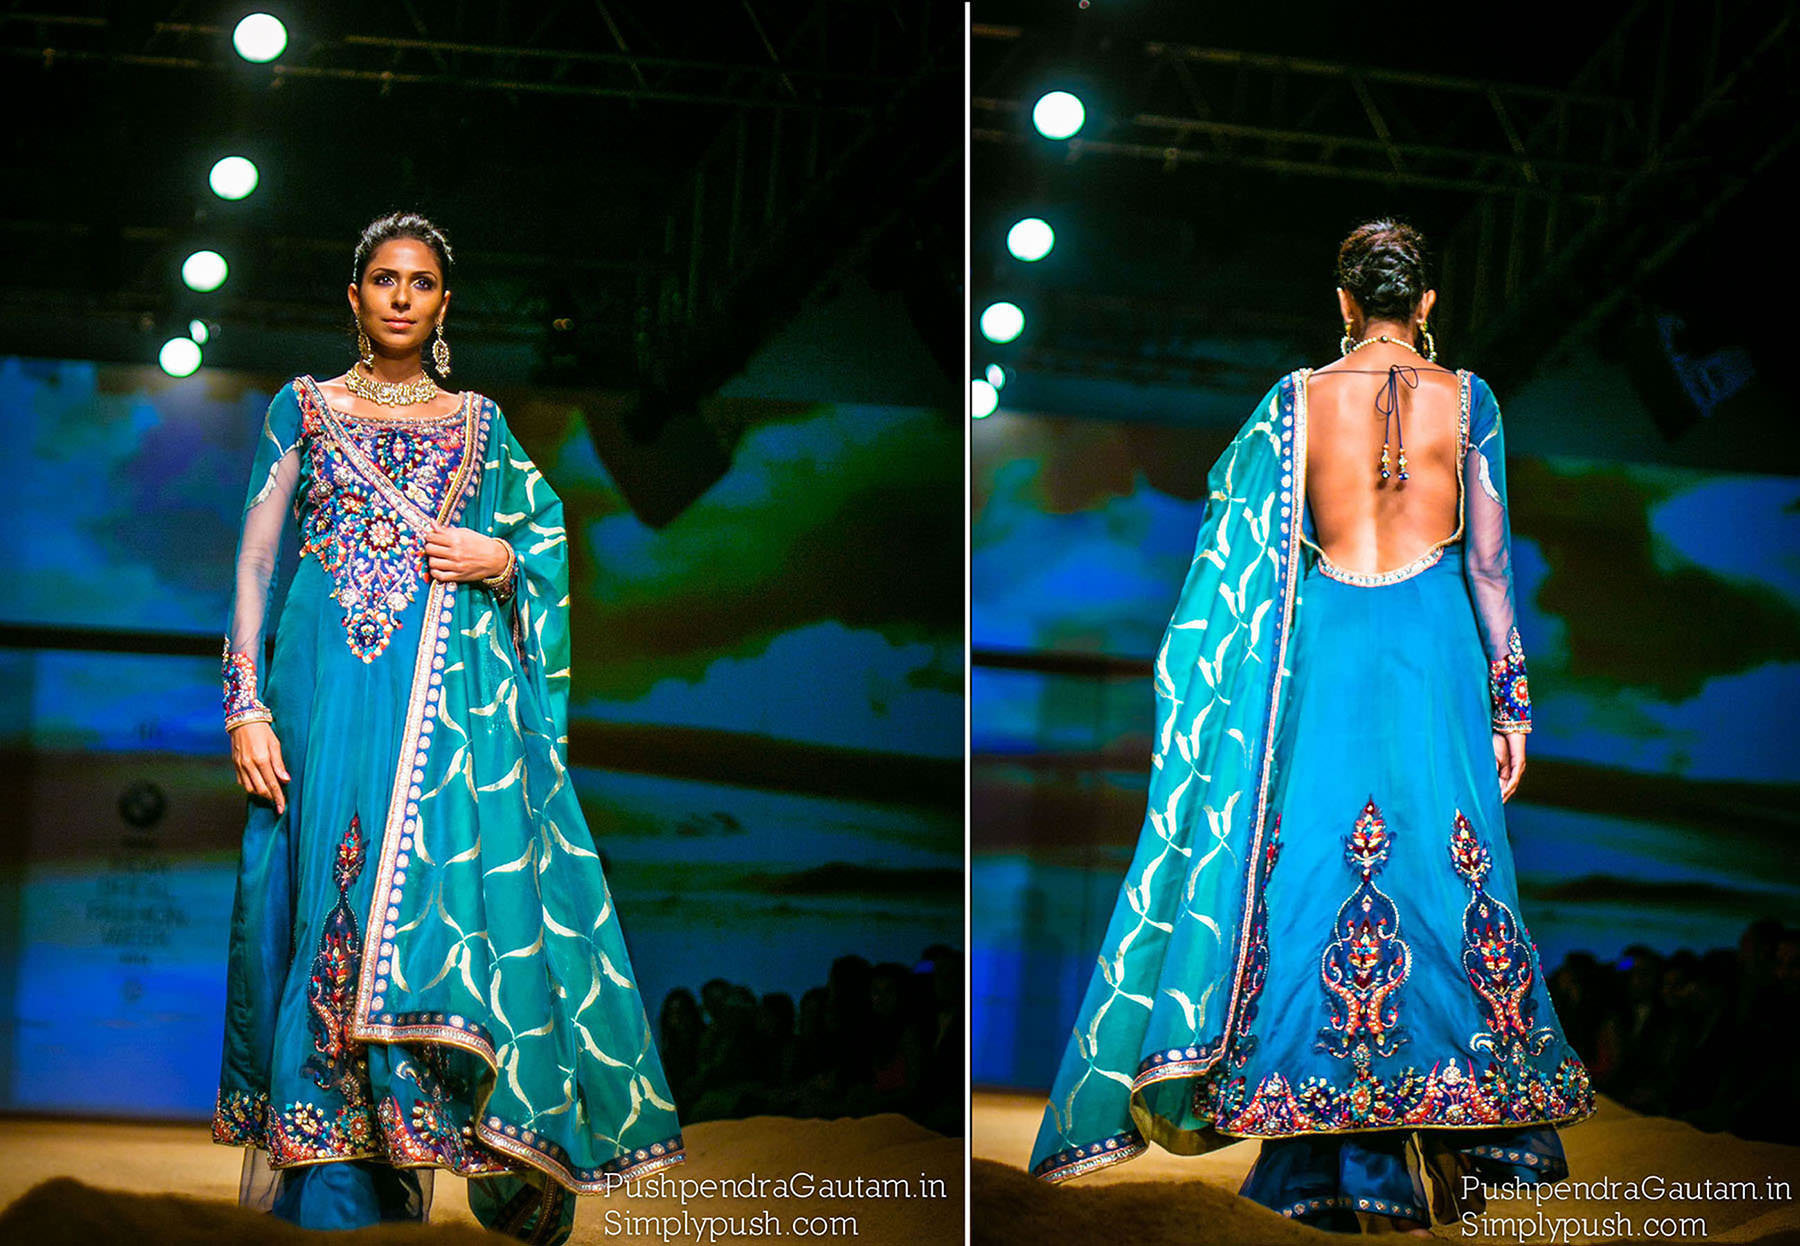 Hire-best-event-photographer-for-fashion-show-delhi